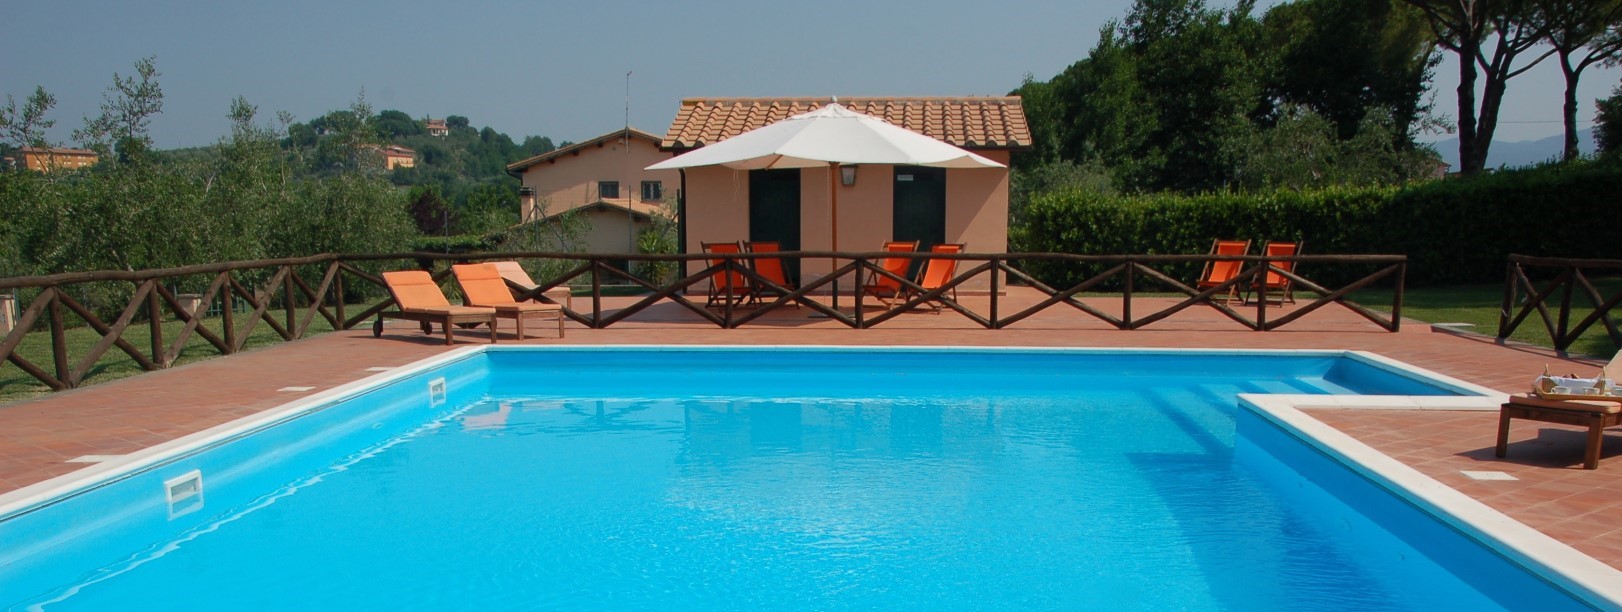 429_3f63149_Villa Domitilla en Villa Sveva, vakantiehuis met privÃ© zwembad, Sabina, Rome (5) kopie